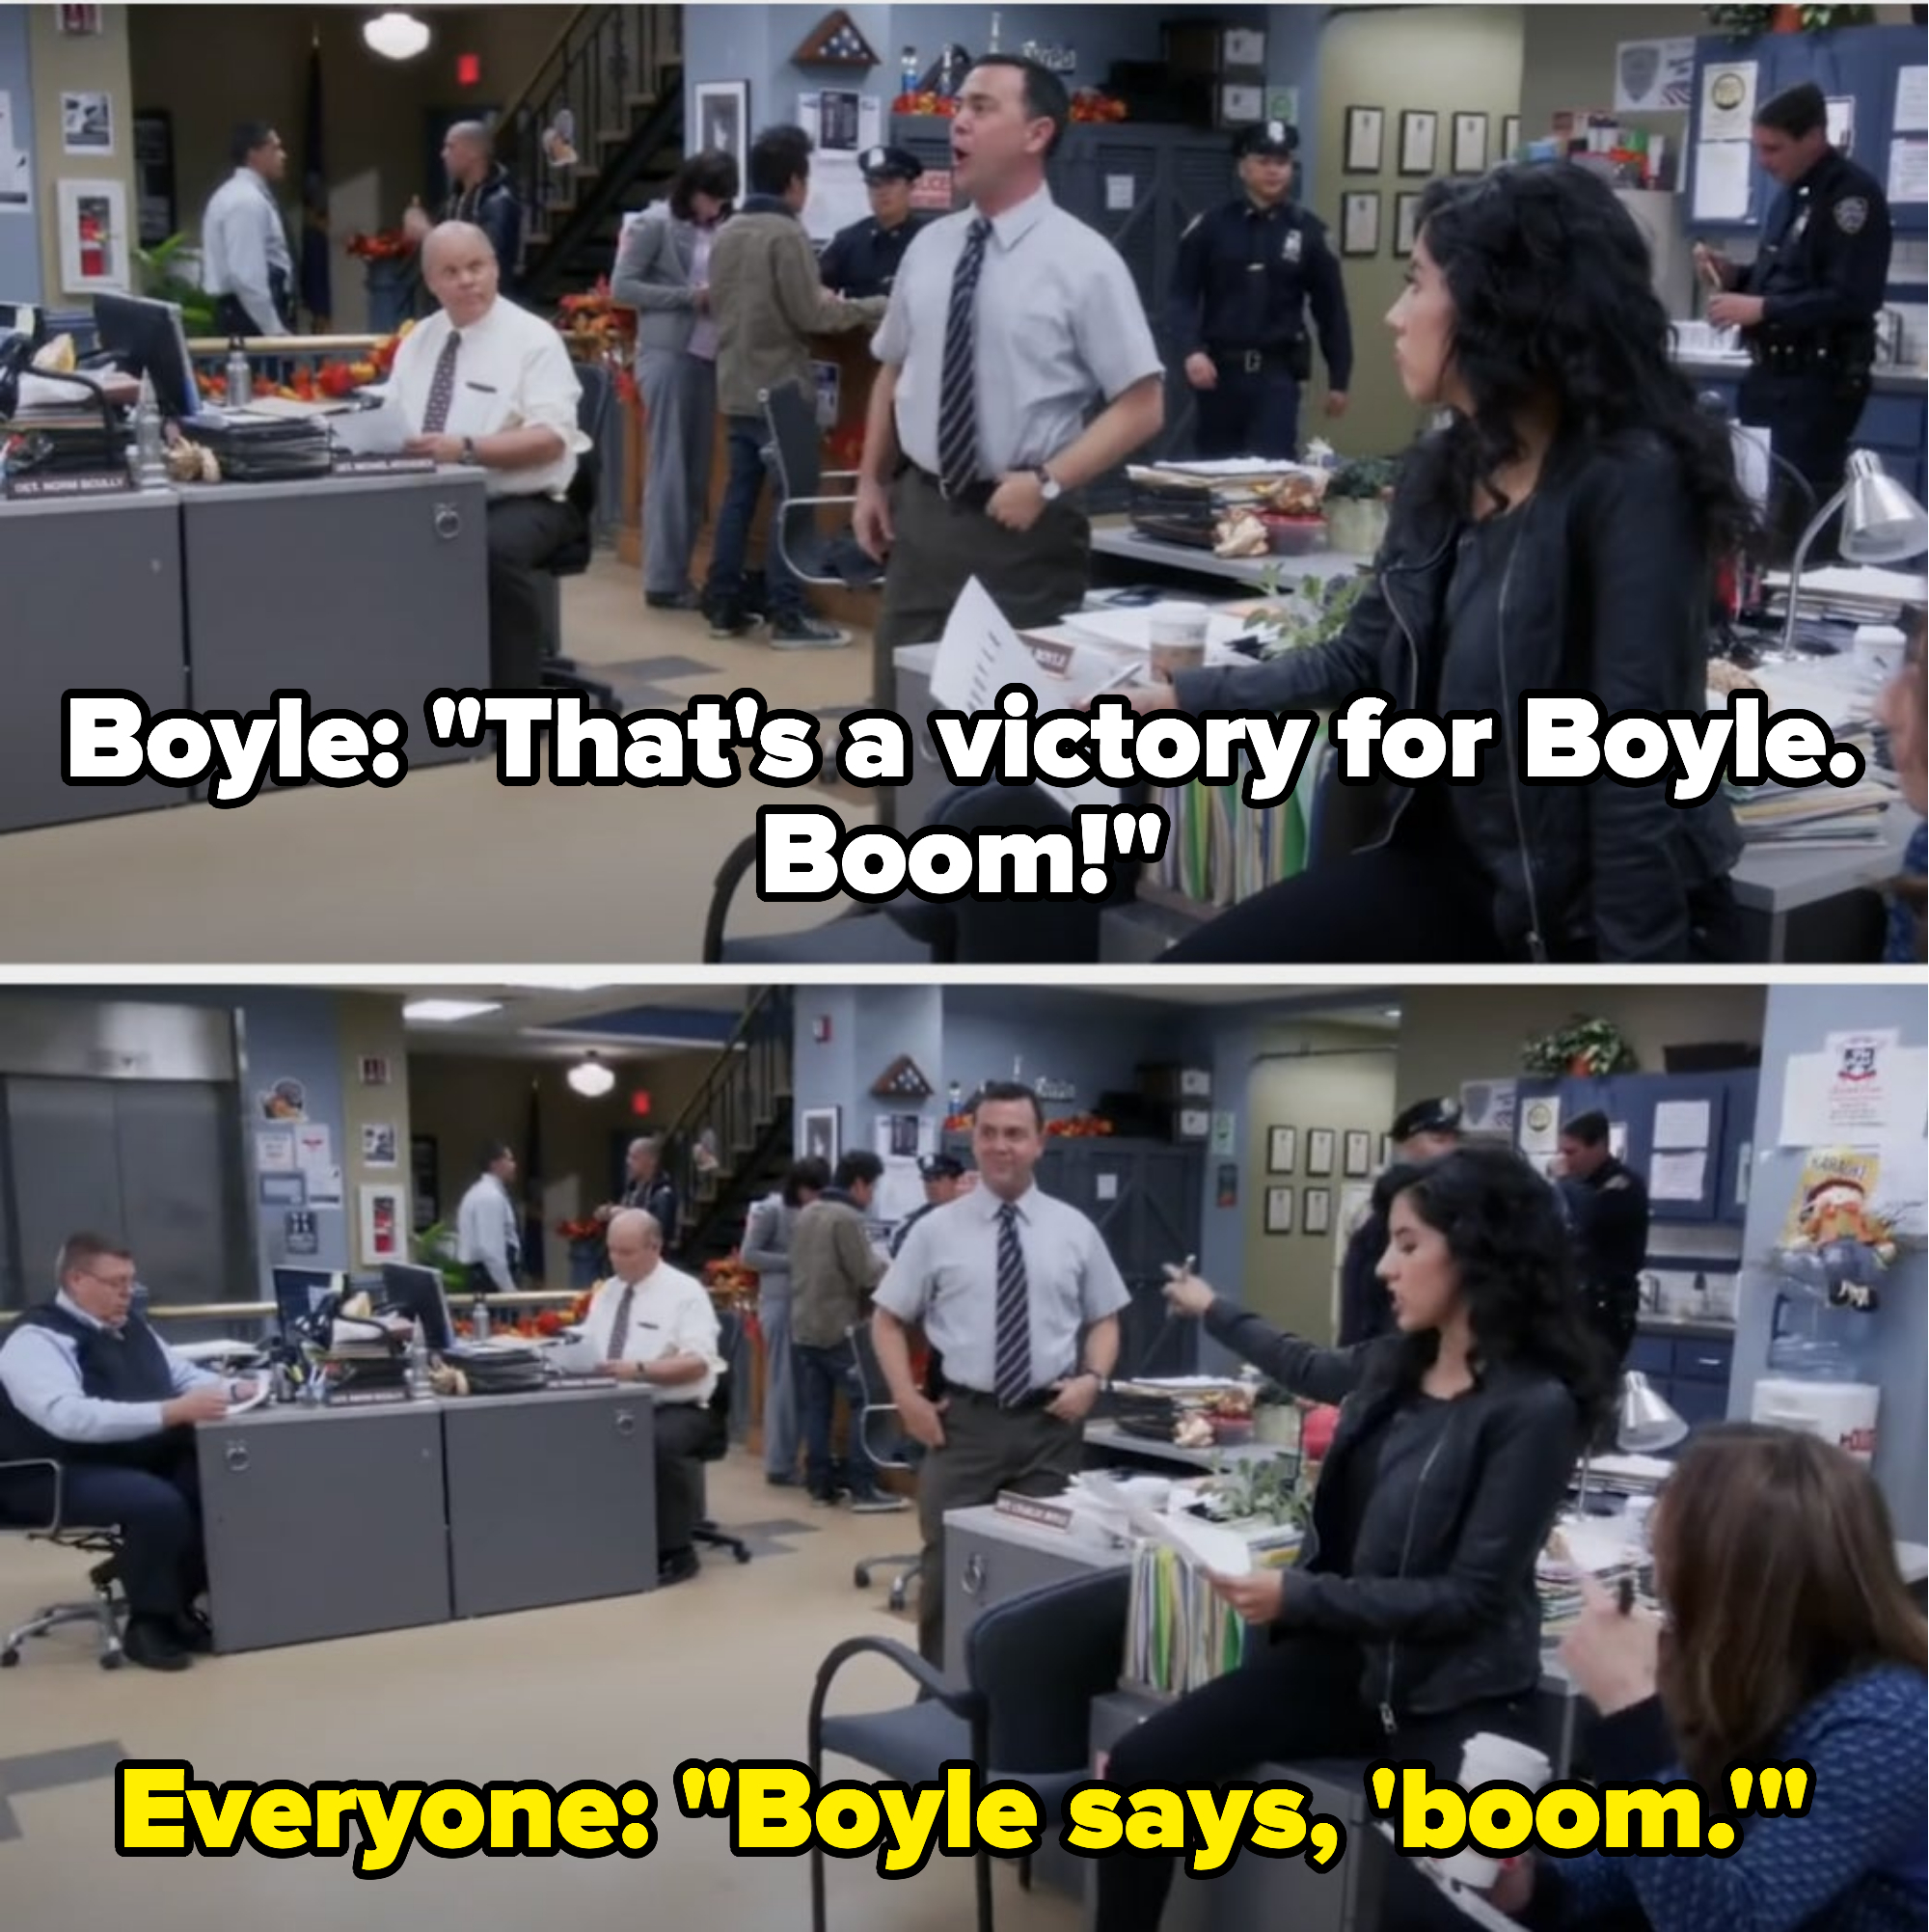 Boyle says boom